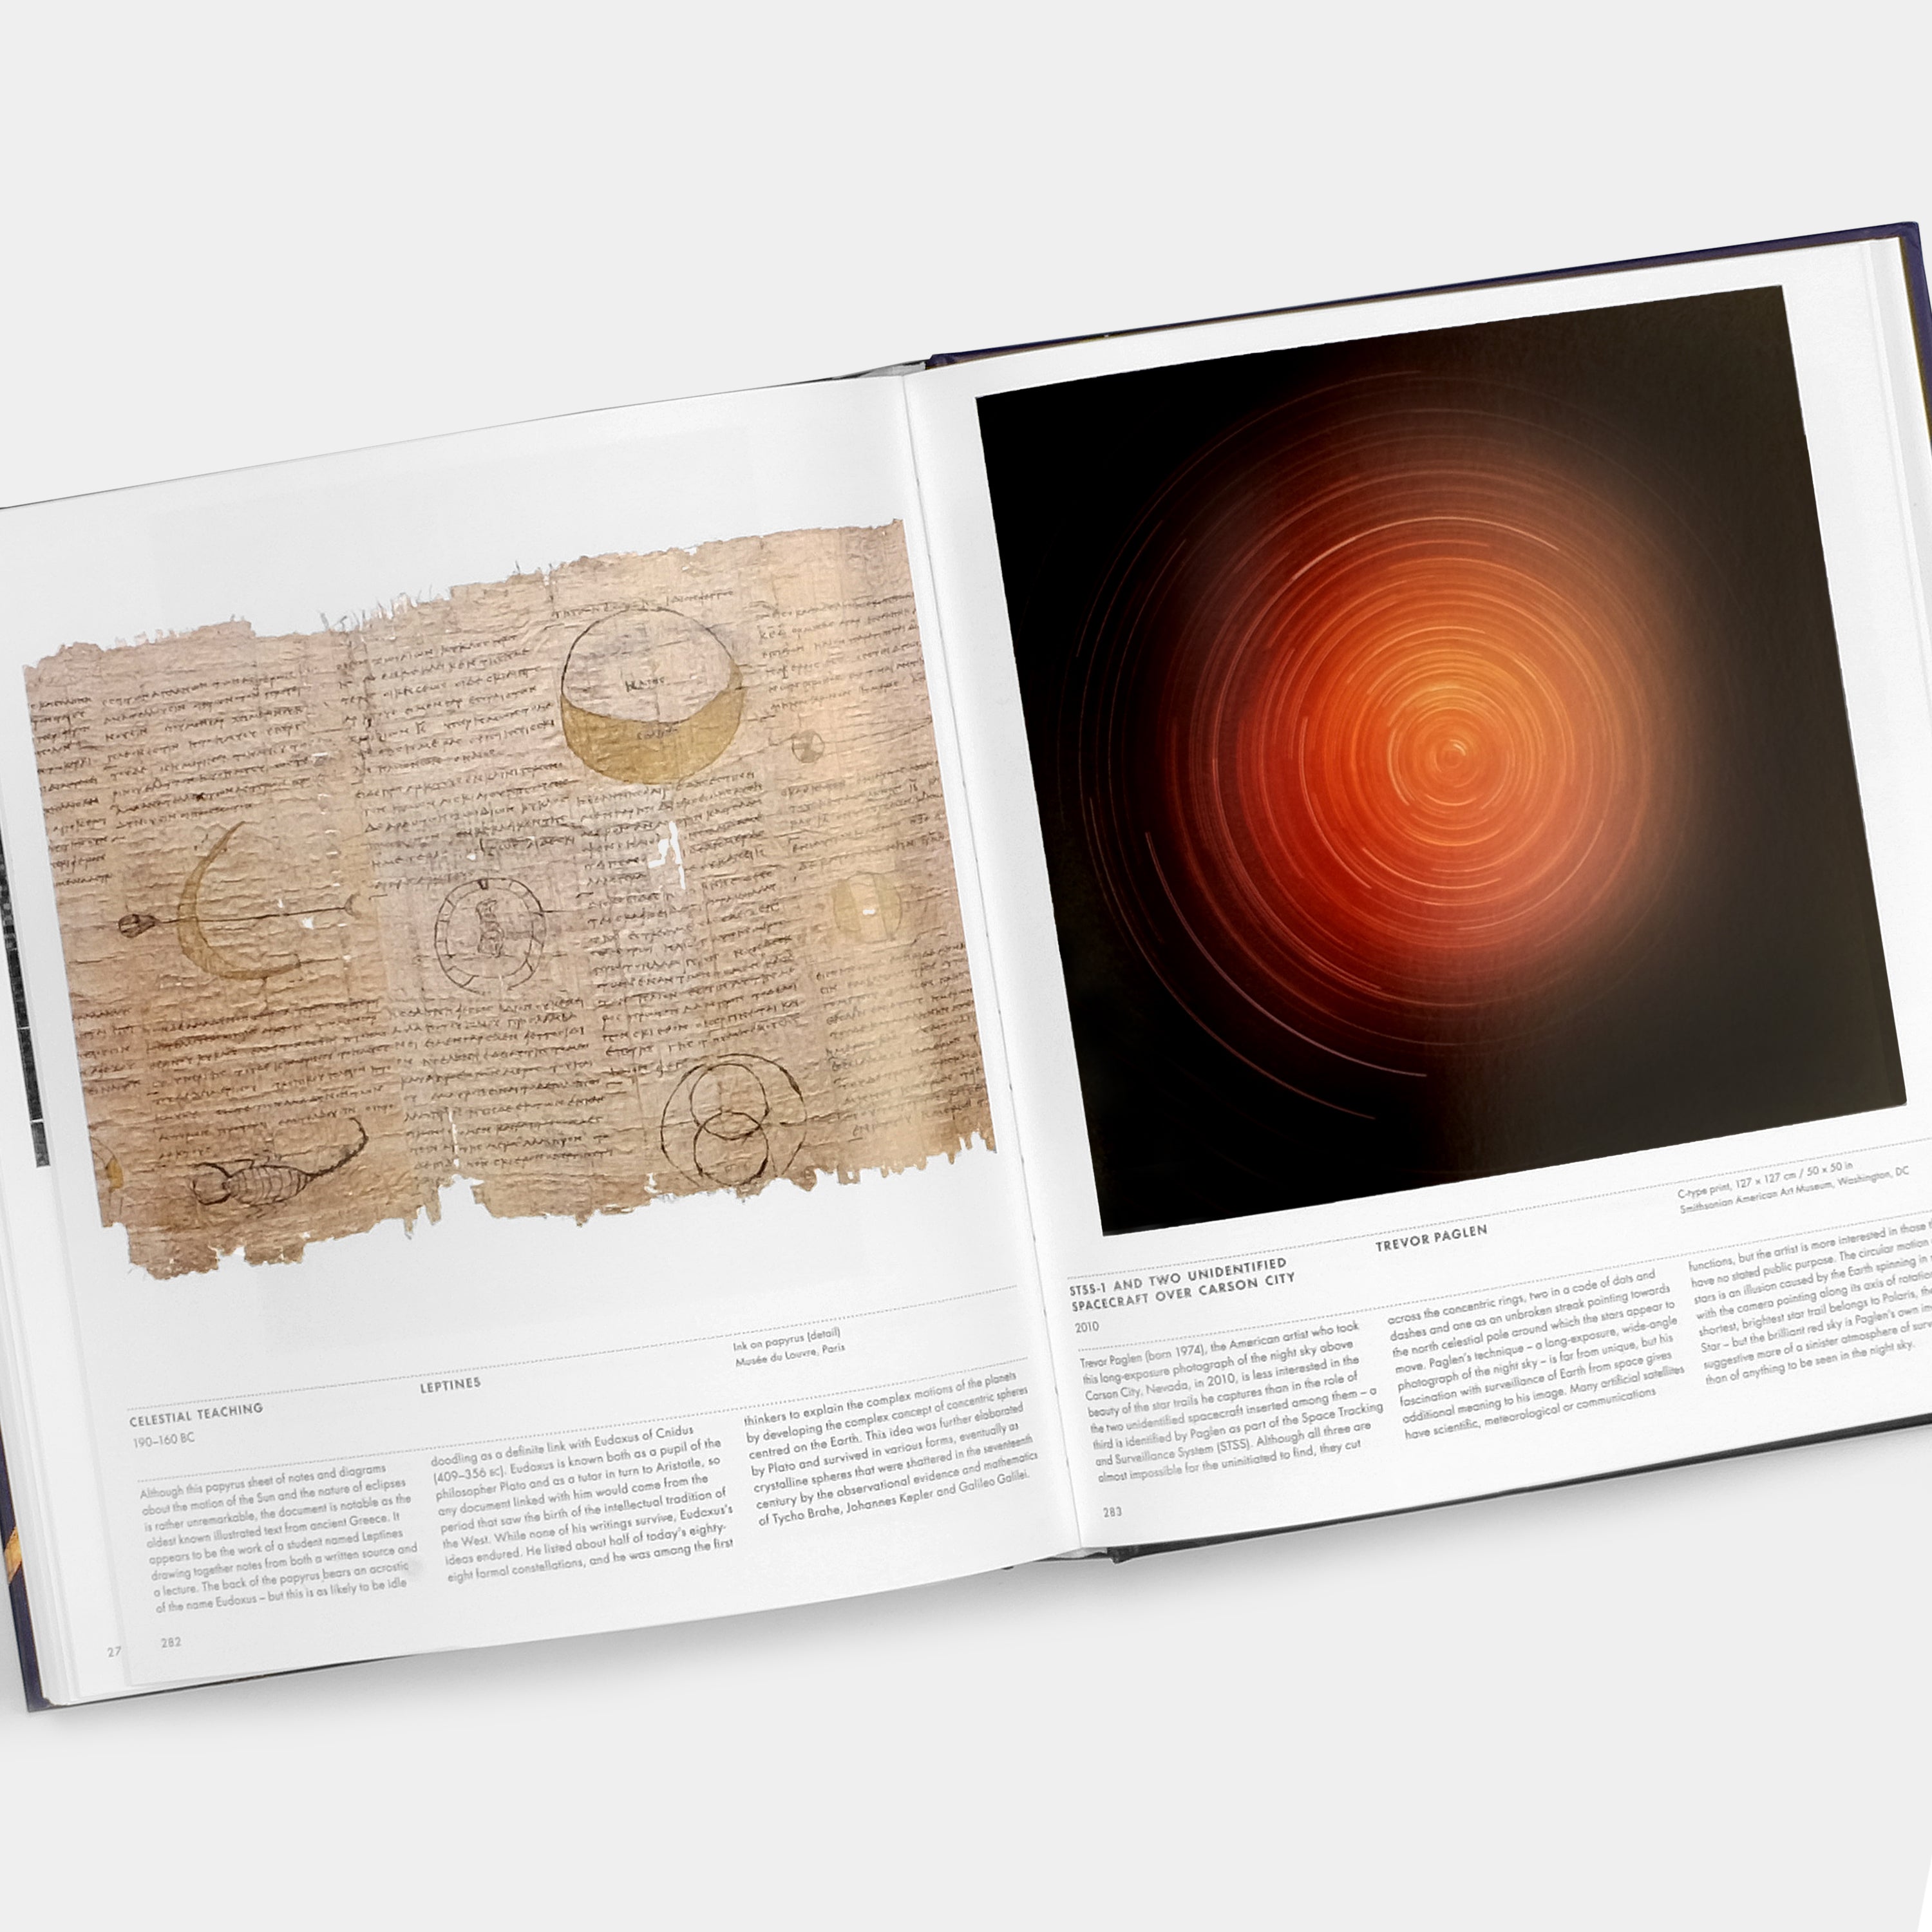 Universe: Exploring the Astronomical World (Midi Format) by Paul Murdin Phaidon Book